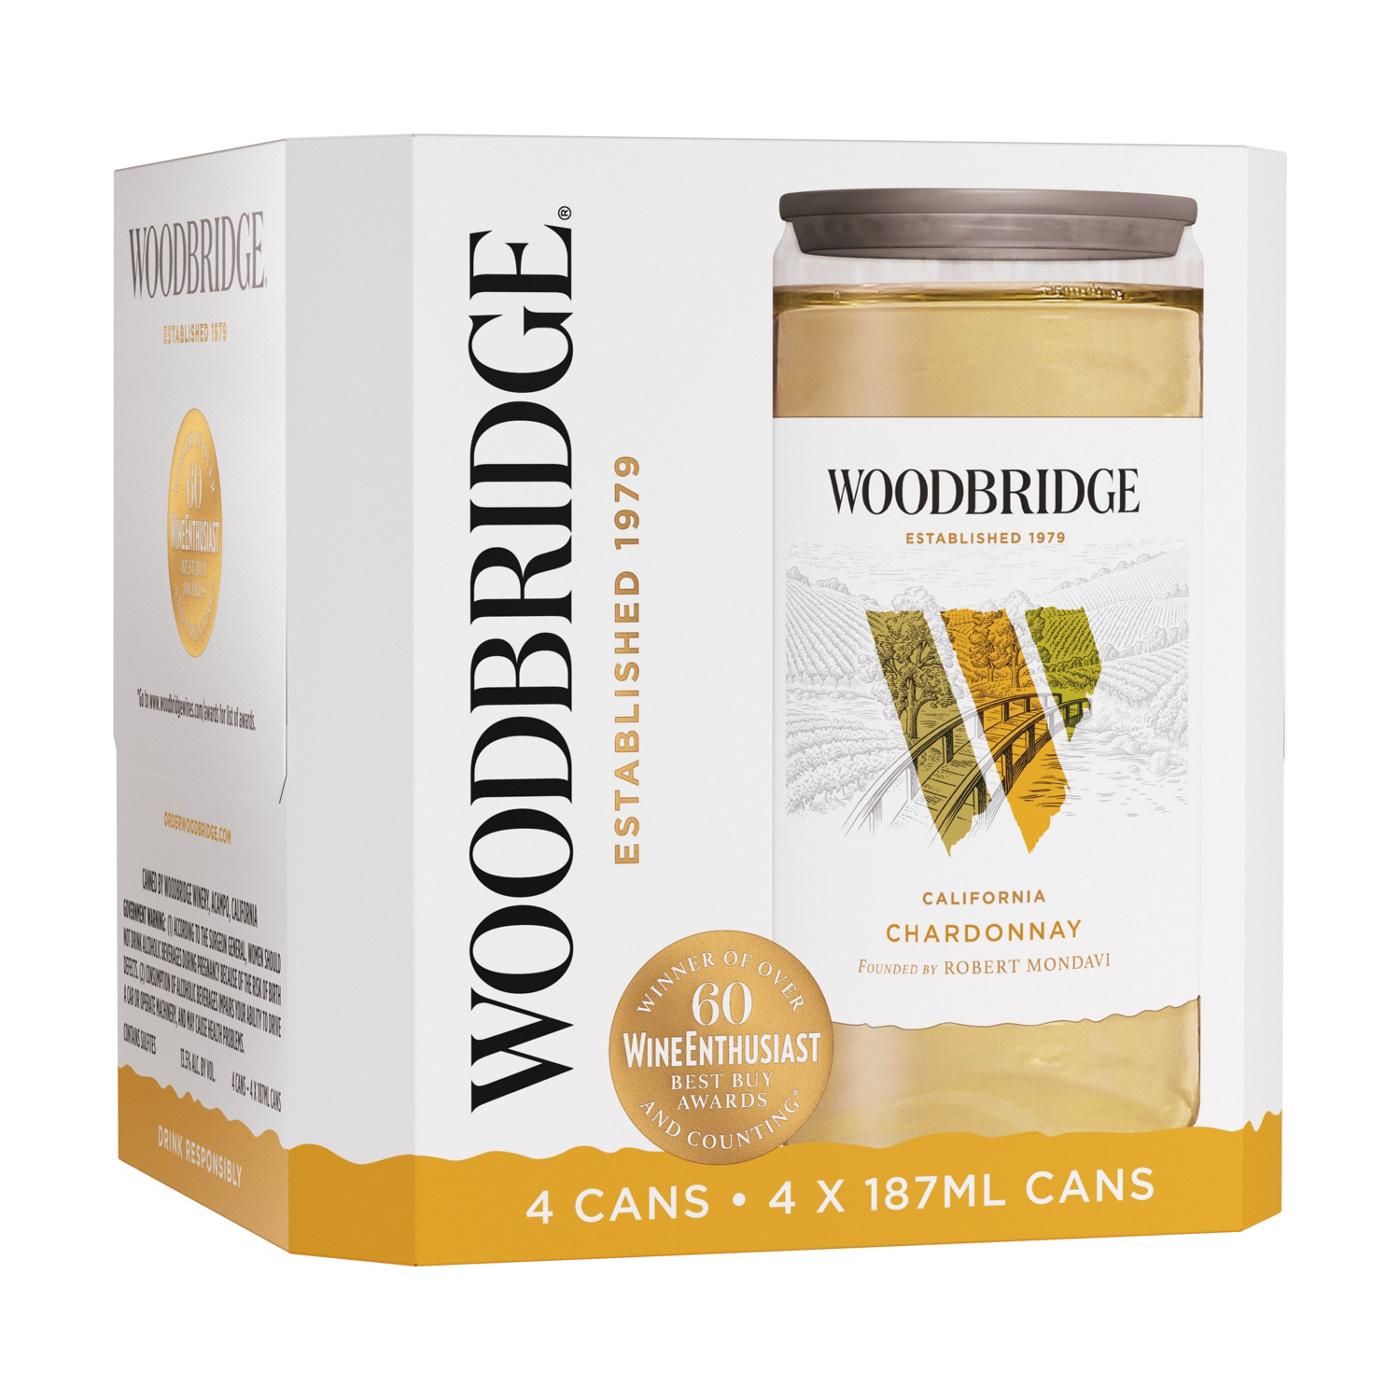 Woodbridge Chardonnay White Wine 187 mL Cans, 4 pk; image 1 of 11